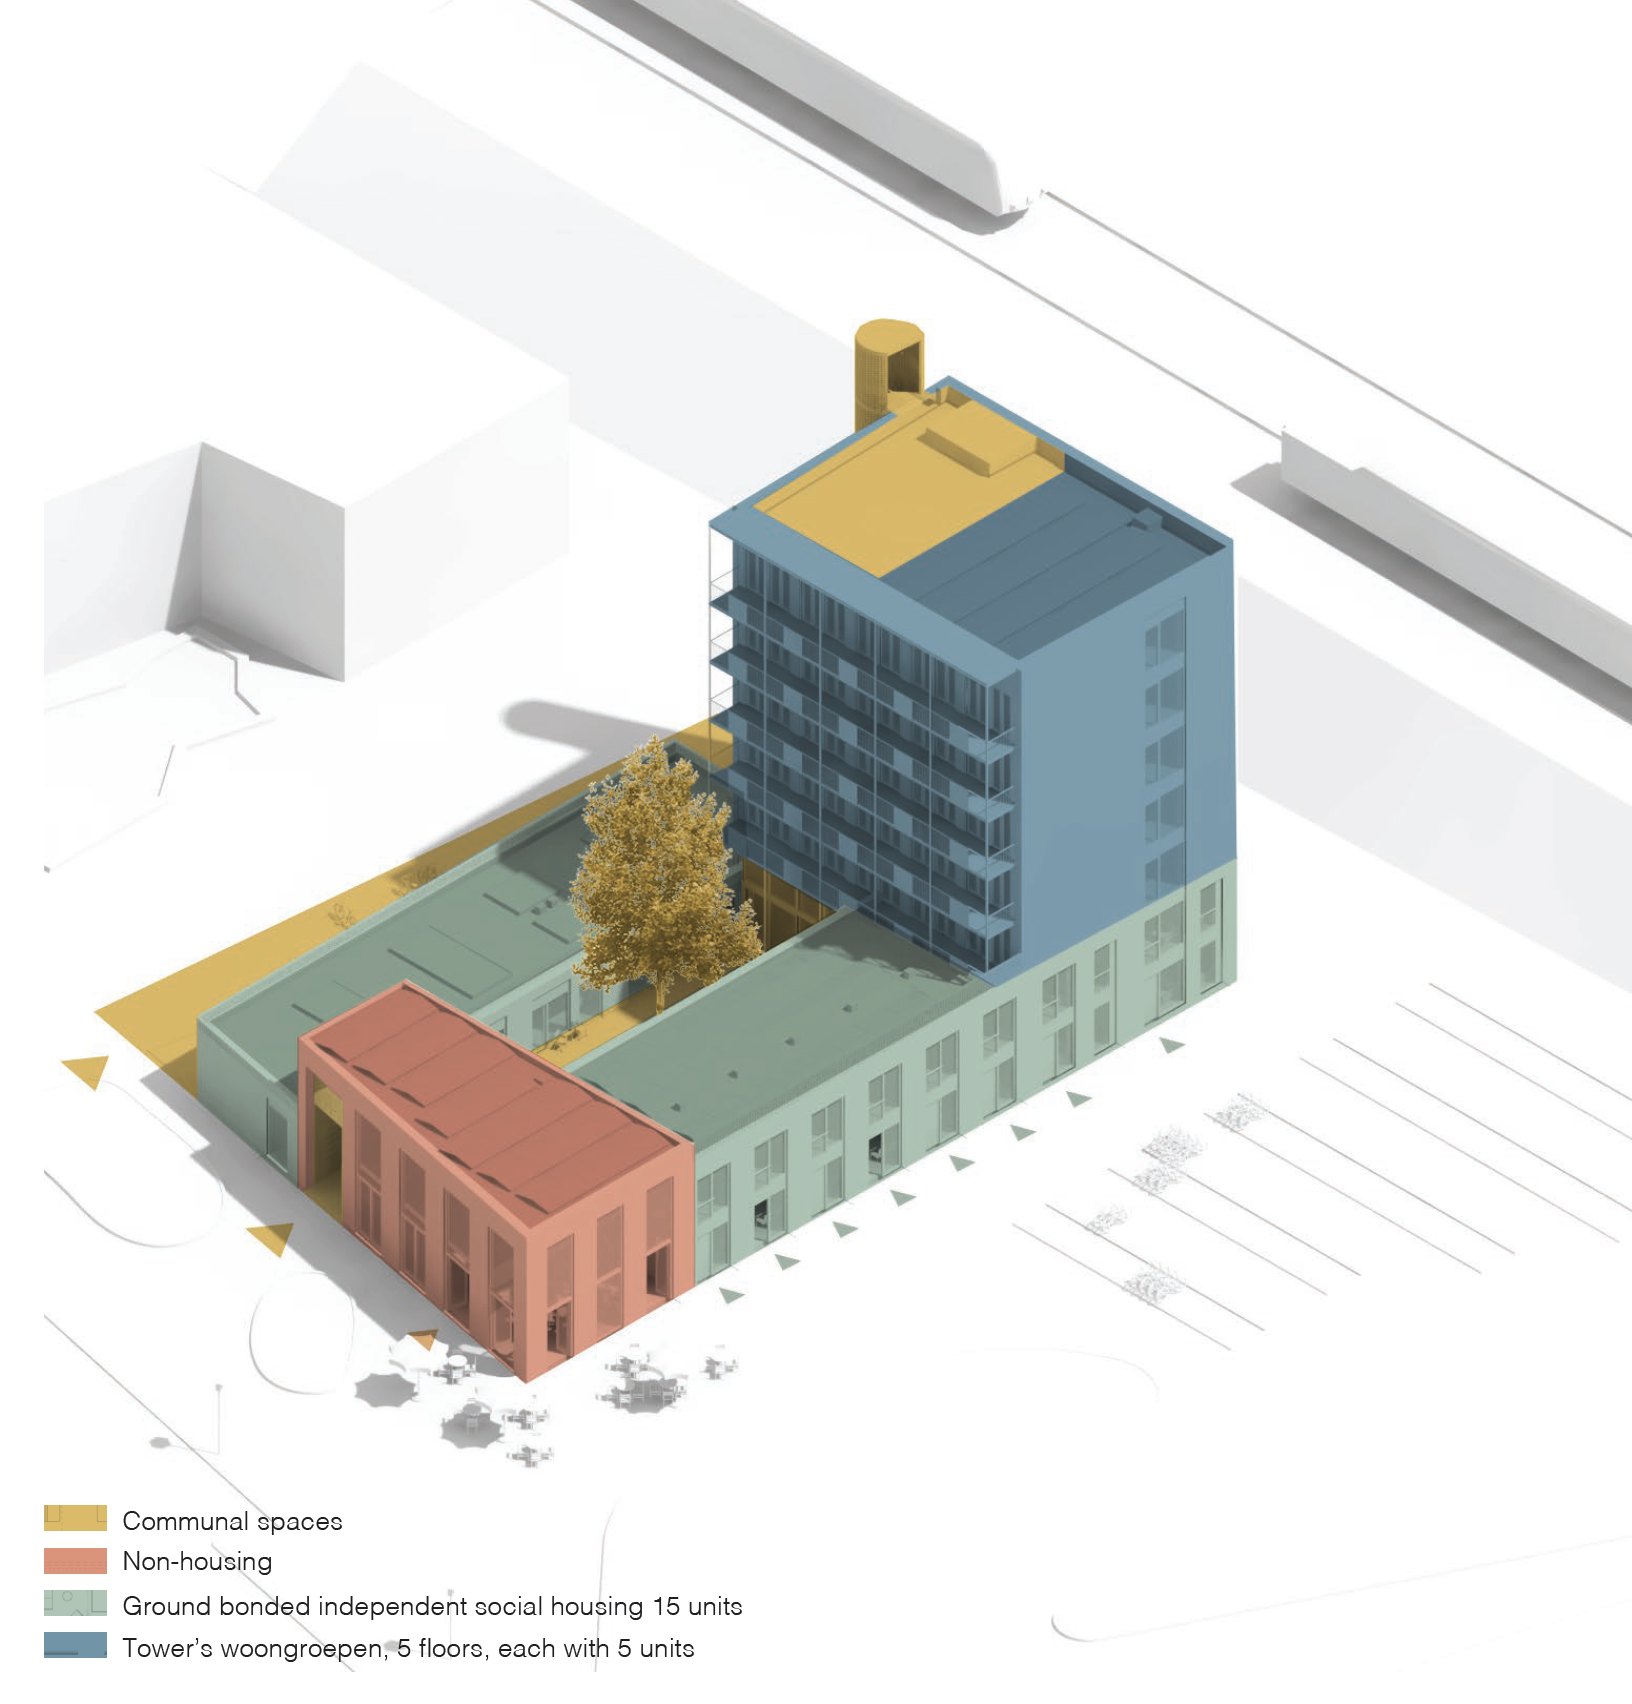 de Nieuwe Meent（dNM）建築藍圖是由設計師和住戶共同合作設計。建築分為三個部分：獨門獨戶的社會住宅和居住團體的共享公寓；非居住用途空間給居民共同使用的空間，設置廚房、洗衣間等生活設施；公共空間則是花園與廣場，對外開放給鄰居或市民。（圖片取自dNM網站）